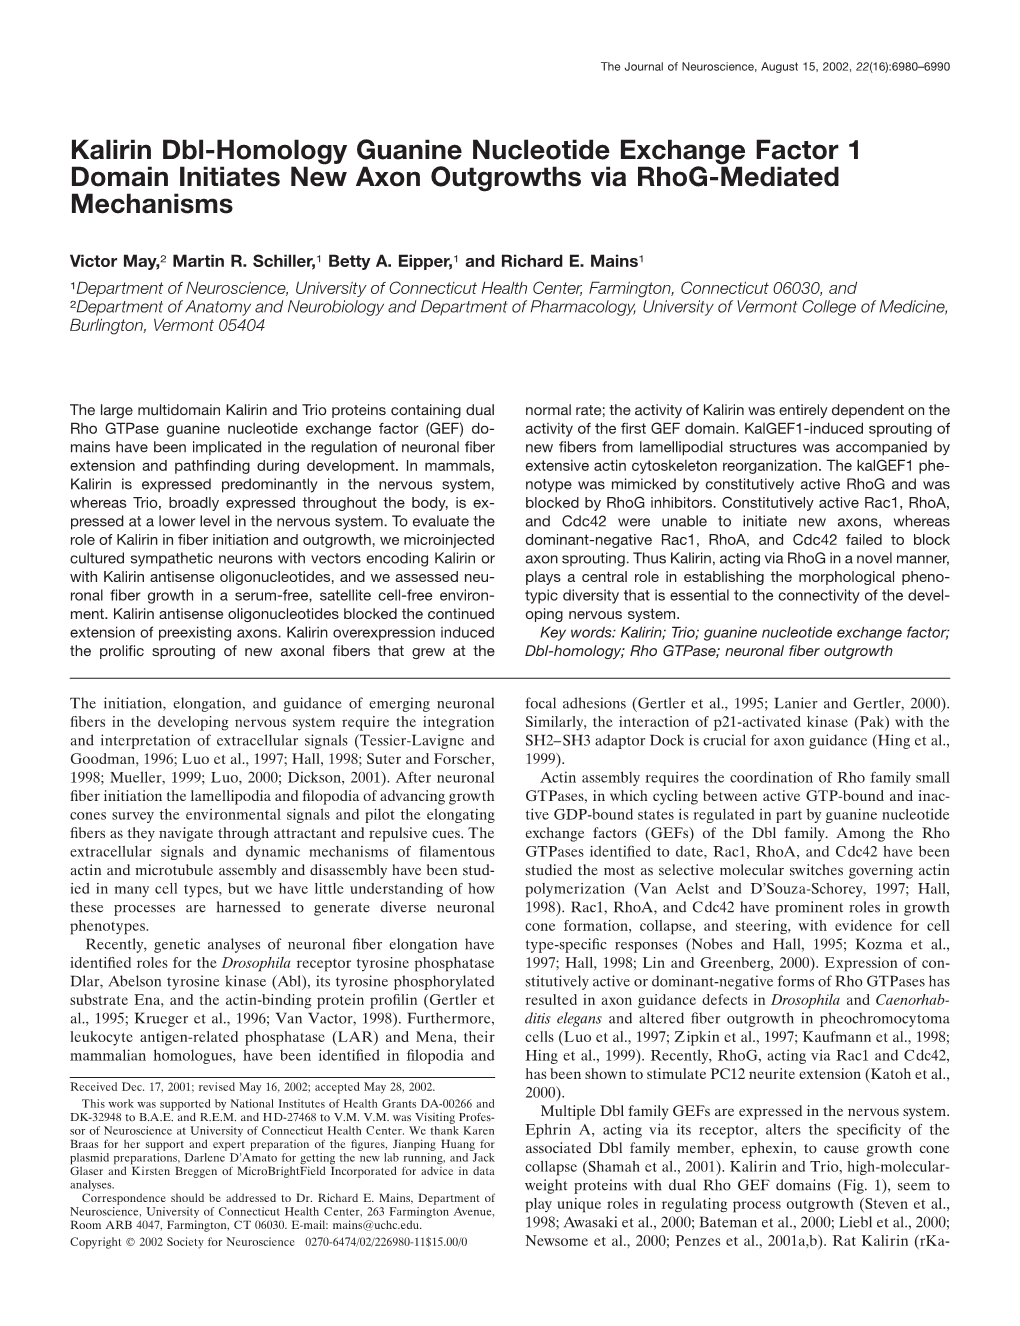 Kalirin Dbl-Homology Guanine Nucleotide Exchange Factor 1 Domain Initiates New Axon Outgrowths Via Rhog-Mediated Mechanisms